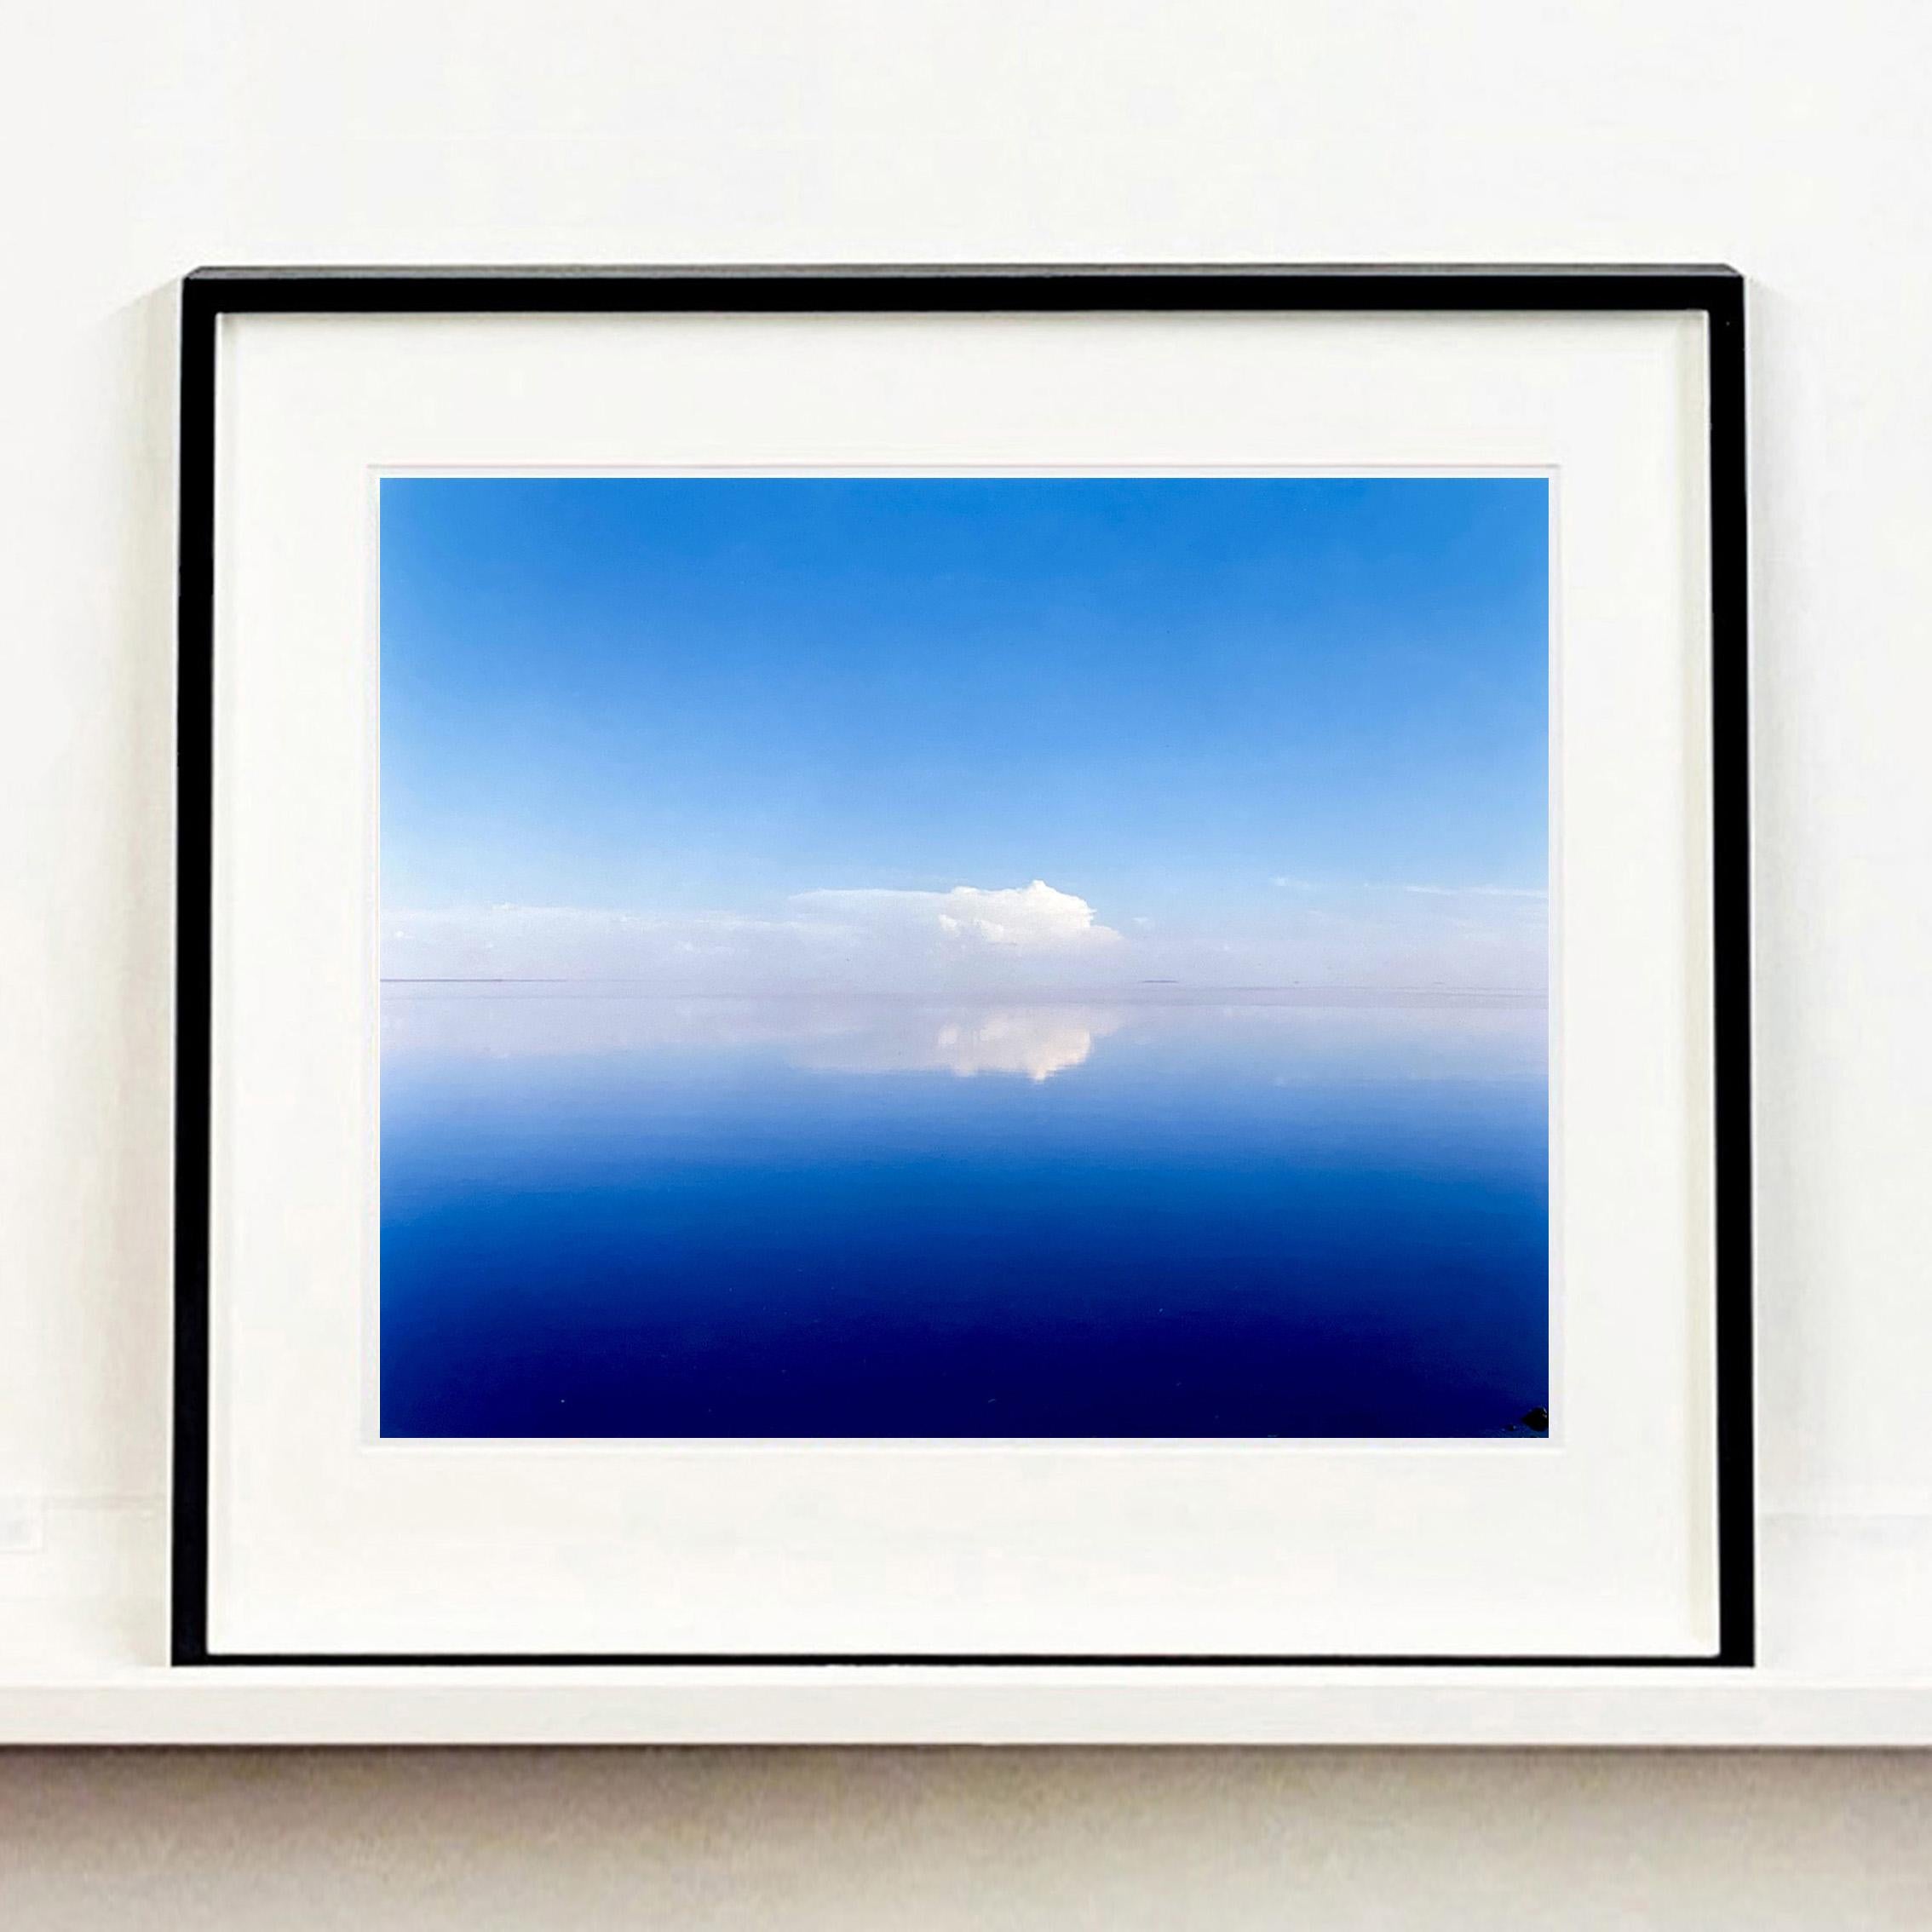 View from Bombay Beach, Salton Sea, California - Color photography - Contemporary Photograph by Richard Heeps